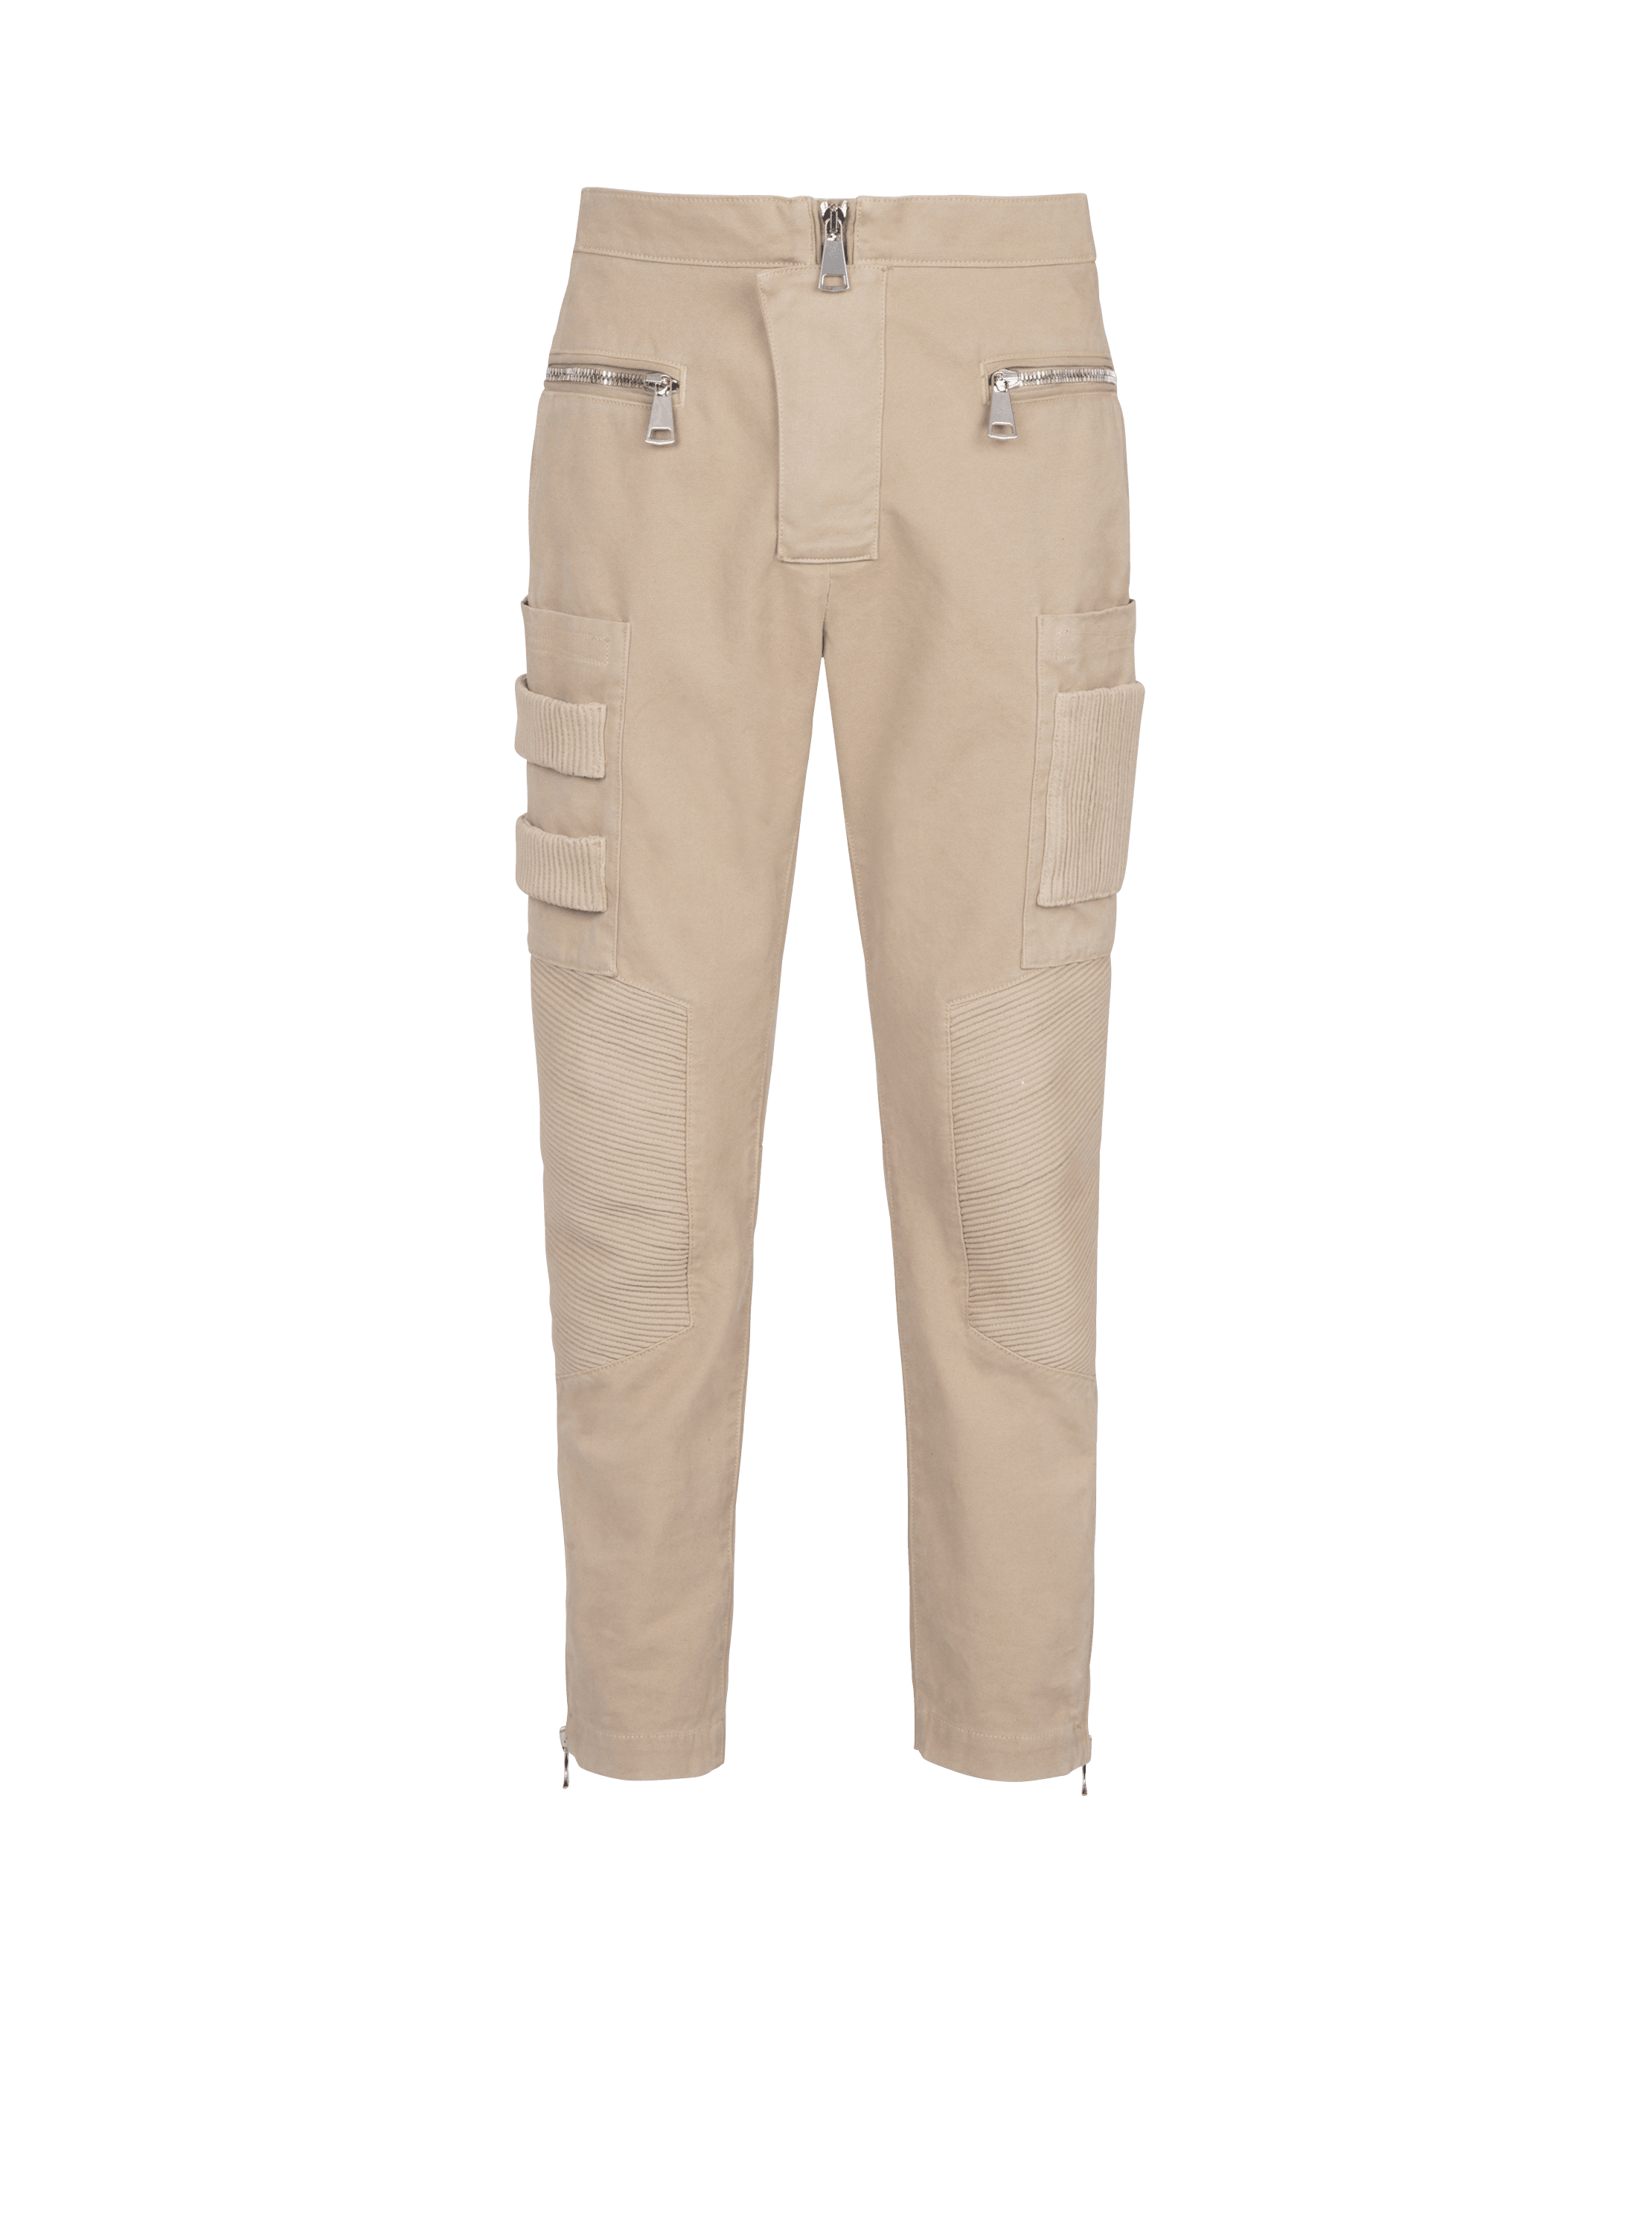 Cotton cargo trousers, beige, hi-res